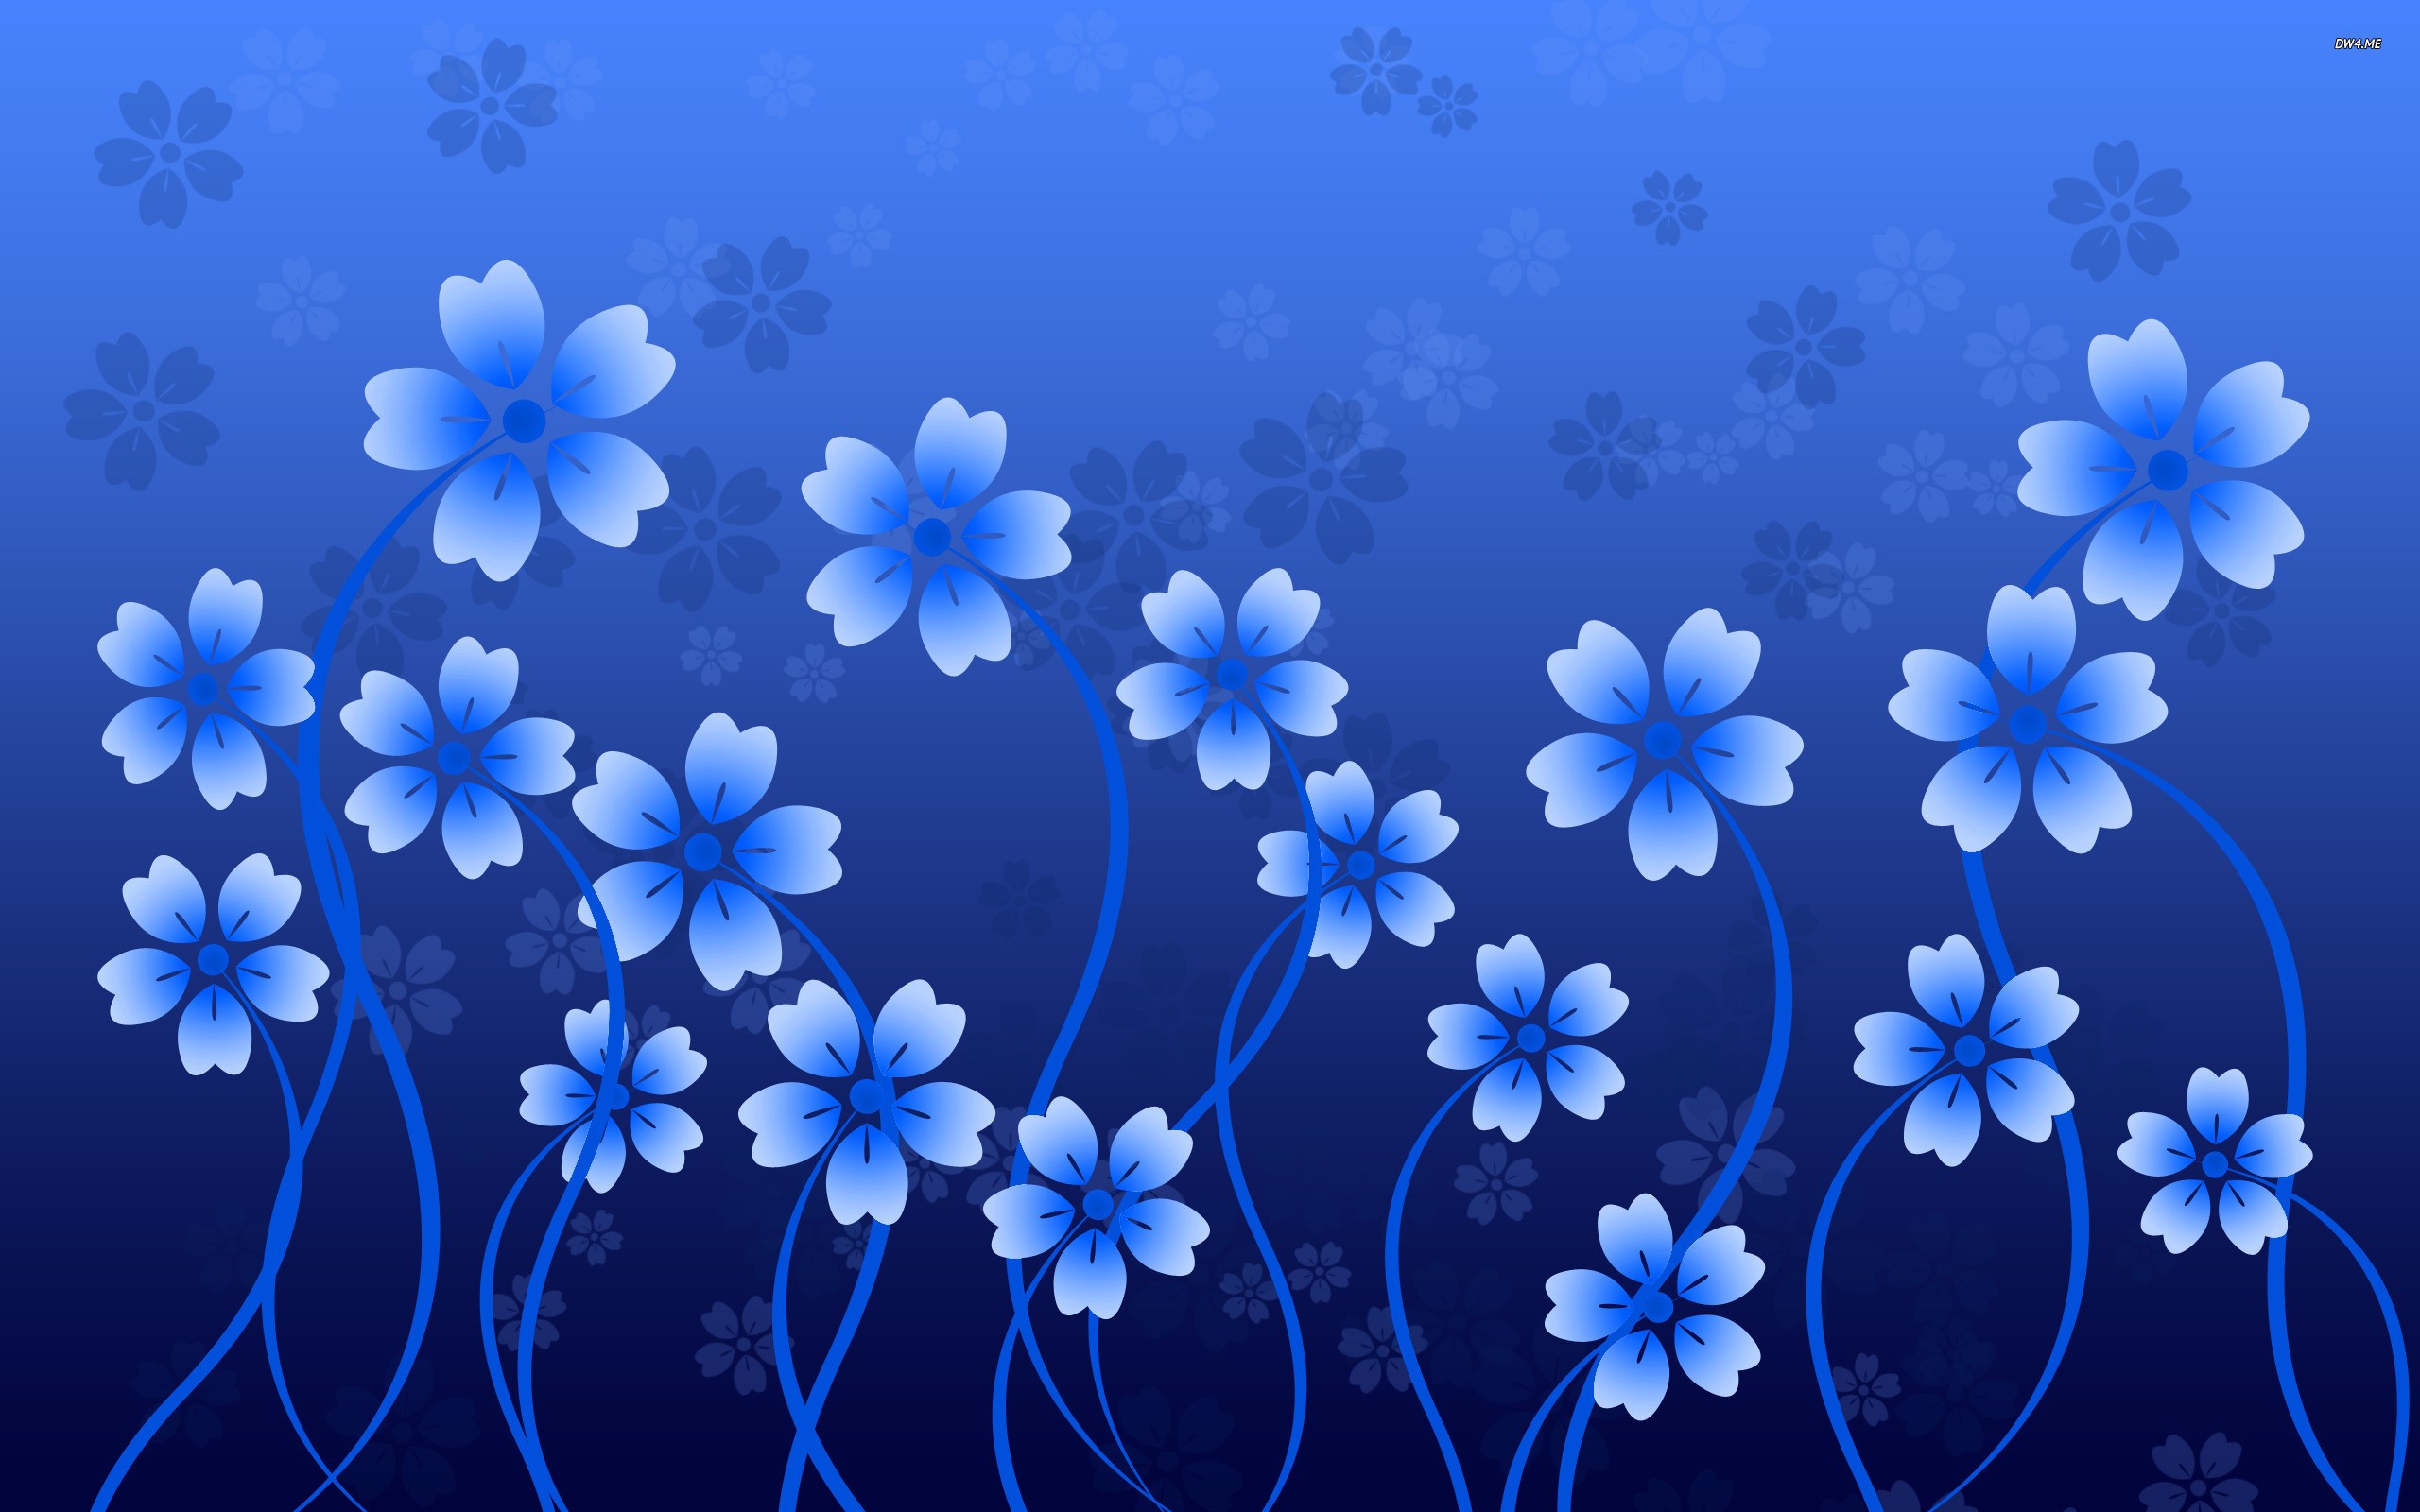 blaue blumentapete,blau,blume,kobaltblau,pflanze,himmel